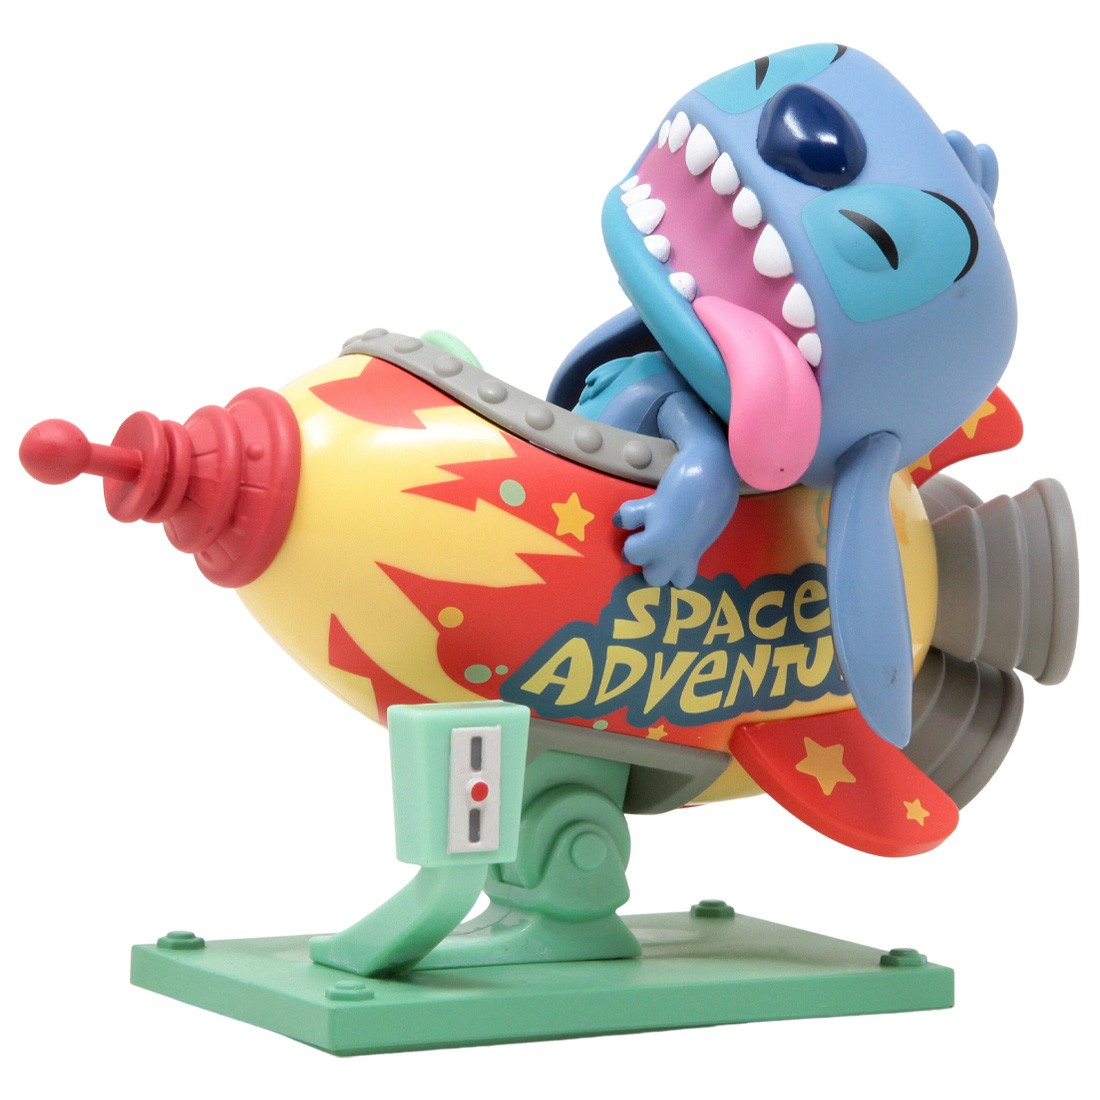 Stitch in Rocket (Lilo & Stitch) Funko Pop! Rides